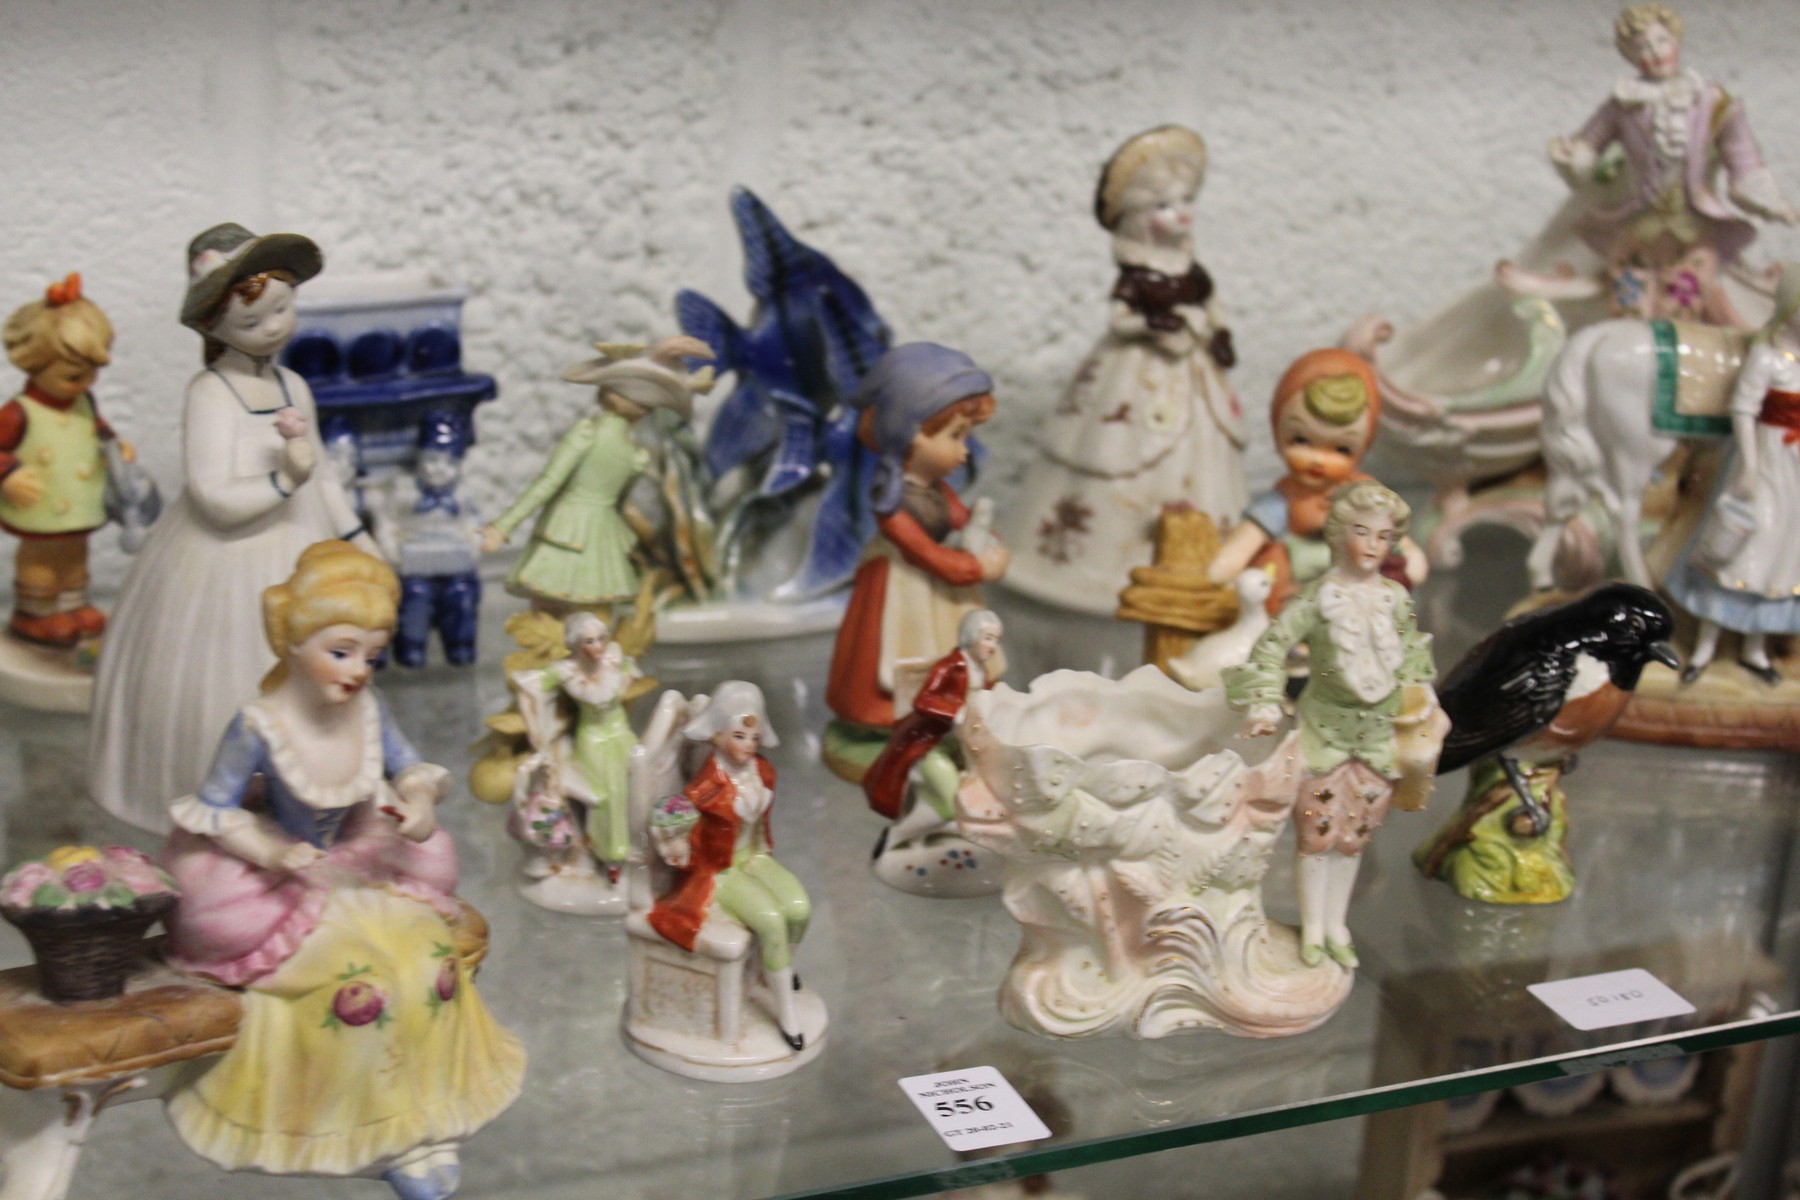 A quantity of decorative figurines etc. - Image 3 of 4